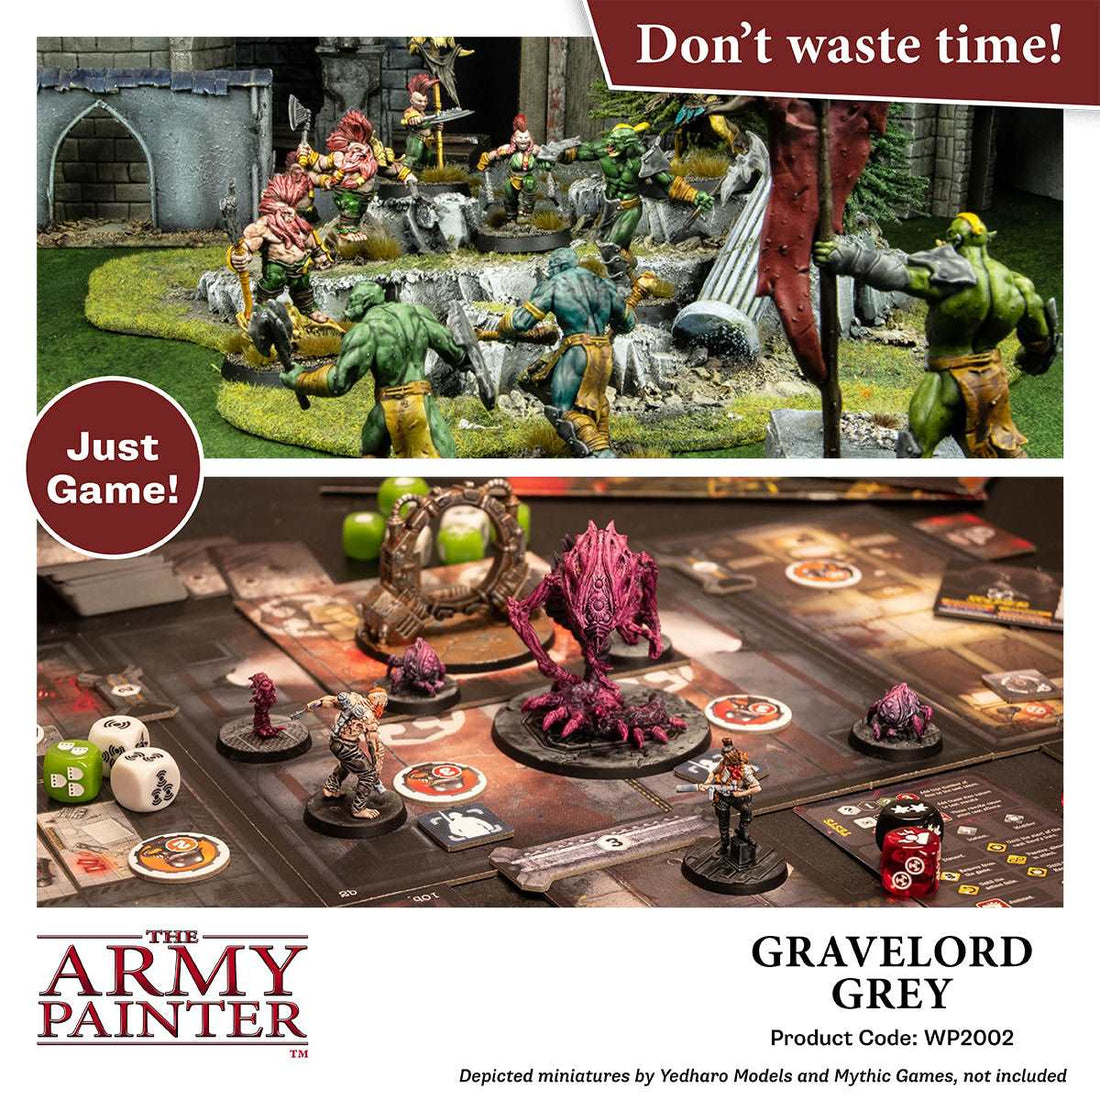 Army Painter: Speedpaint: Gravelord Grey